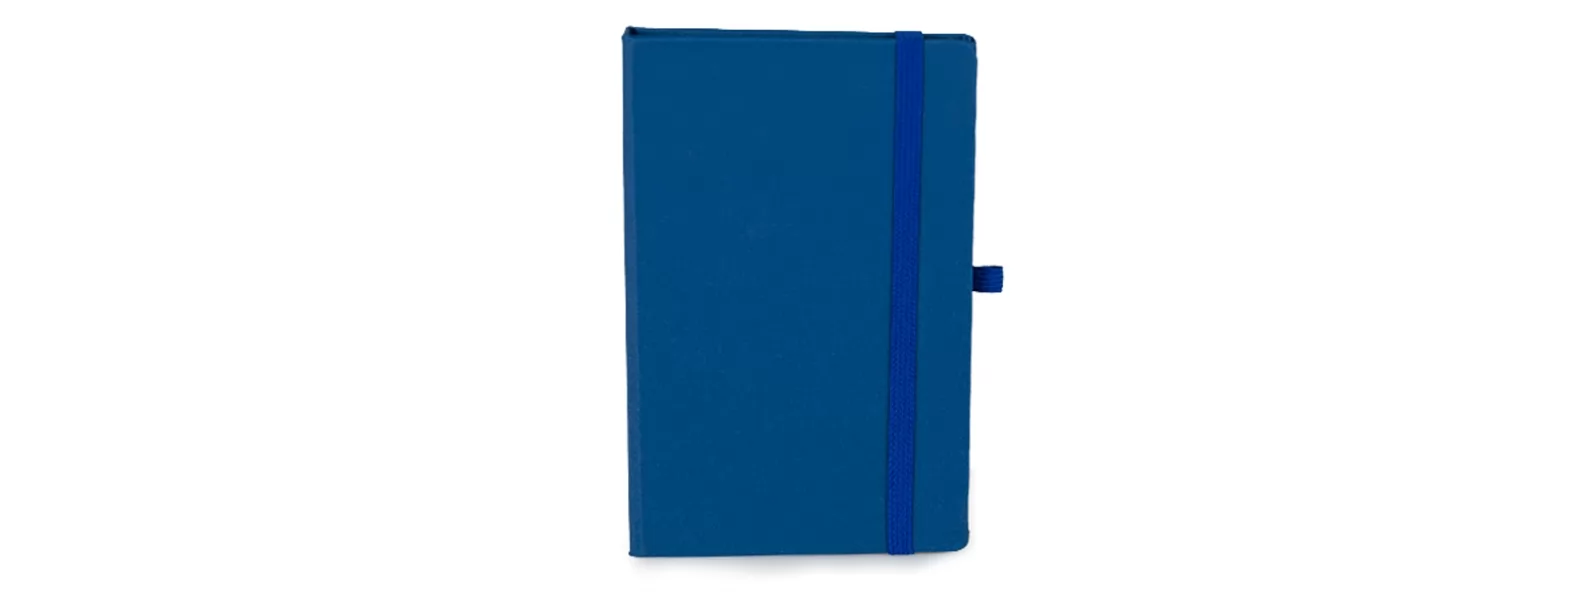 Caderneta C/ Pauta Azul - 14x21 Cm